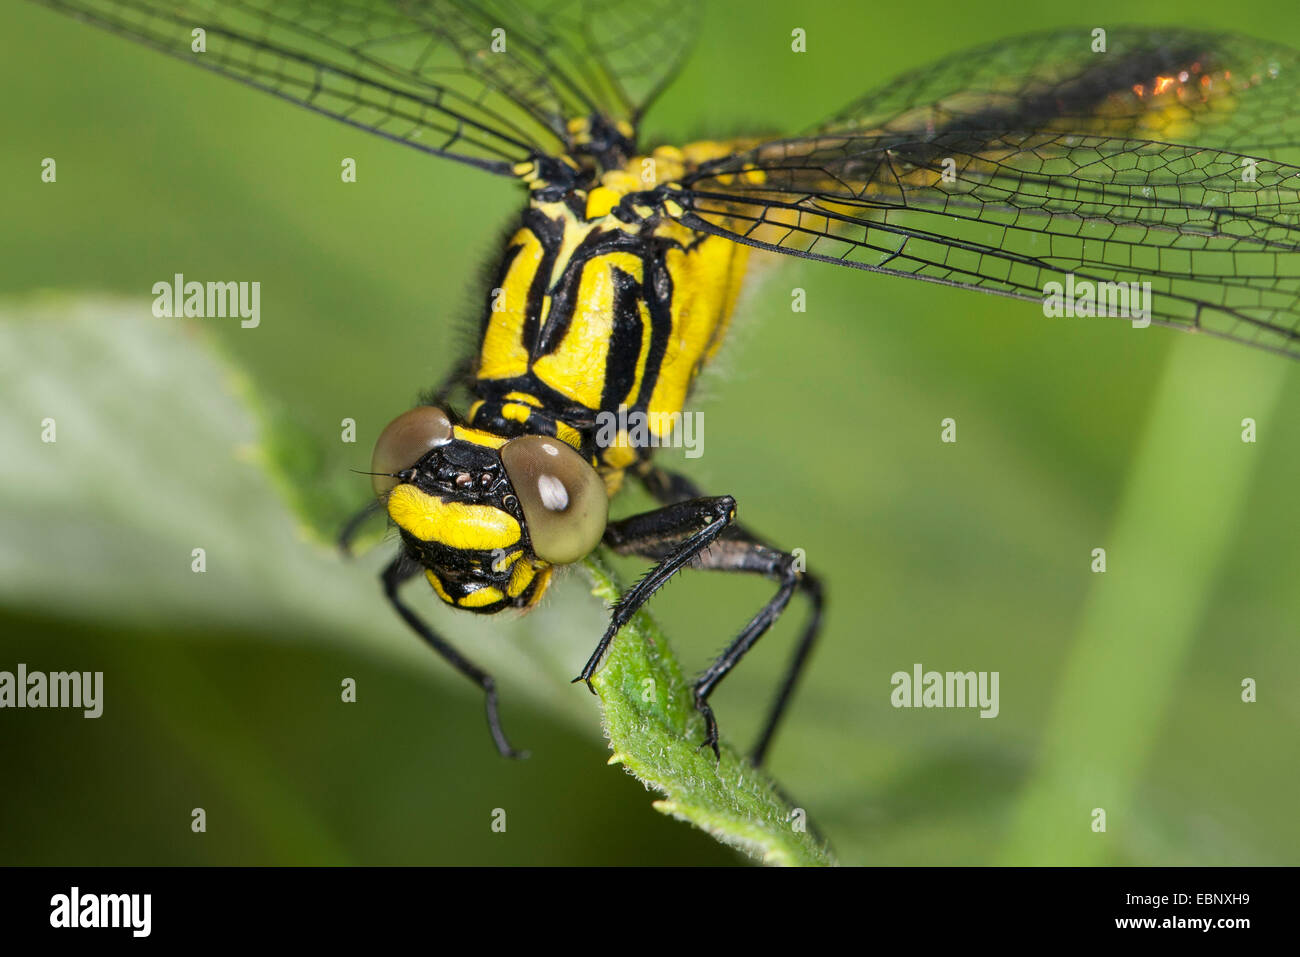 Club-tailed dragonfly (Gomphus vulgatissimus), retrato, Alemania Foto de stock